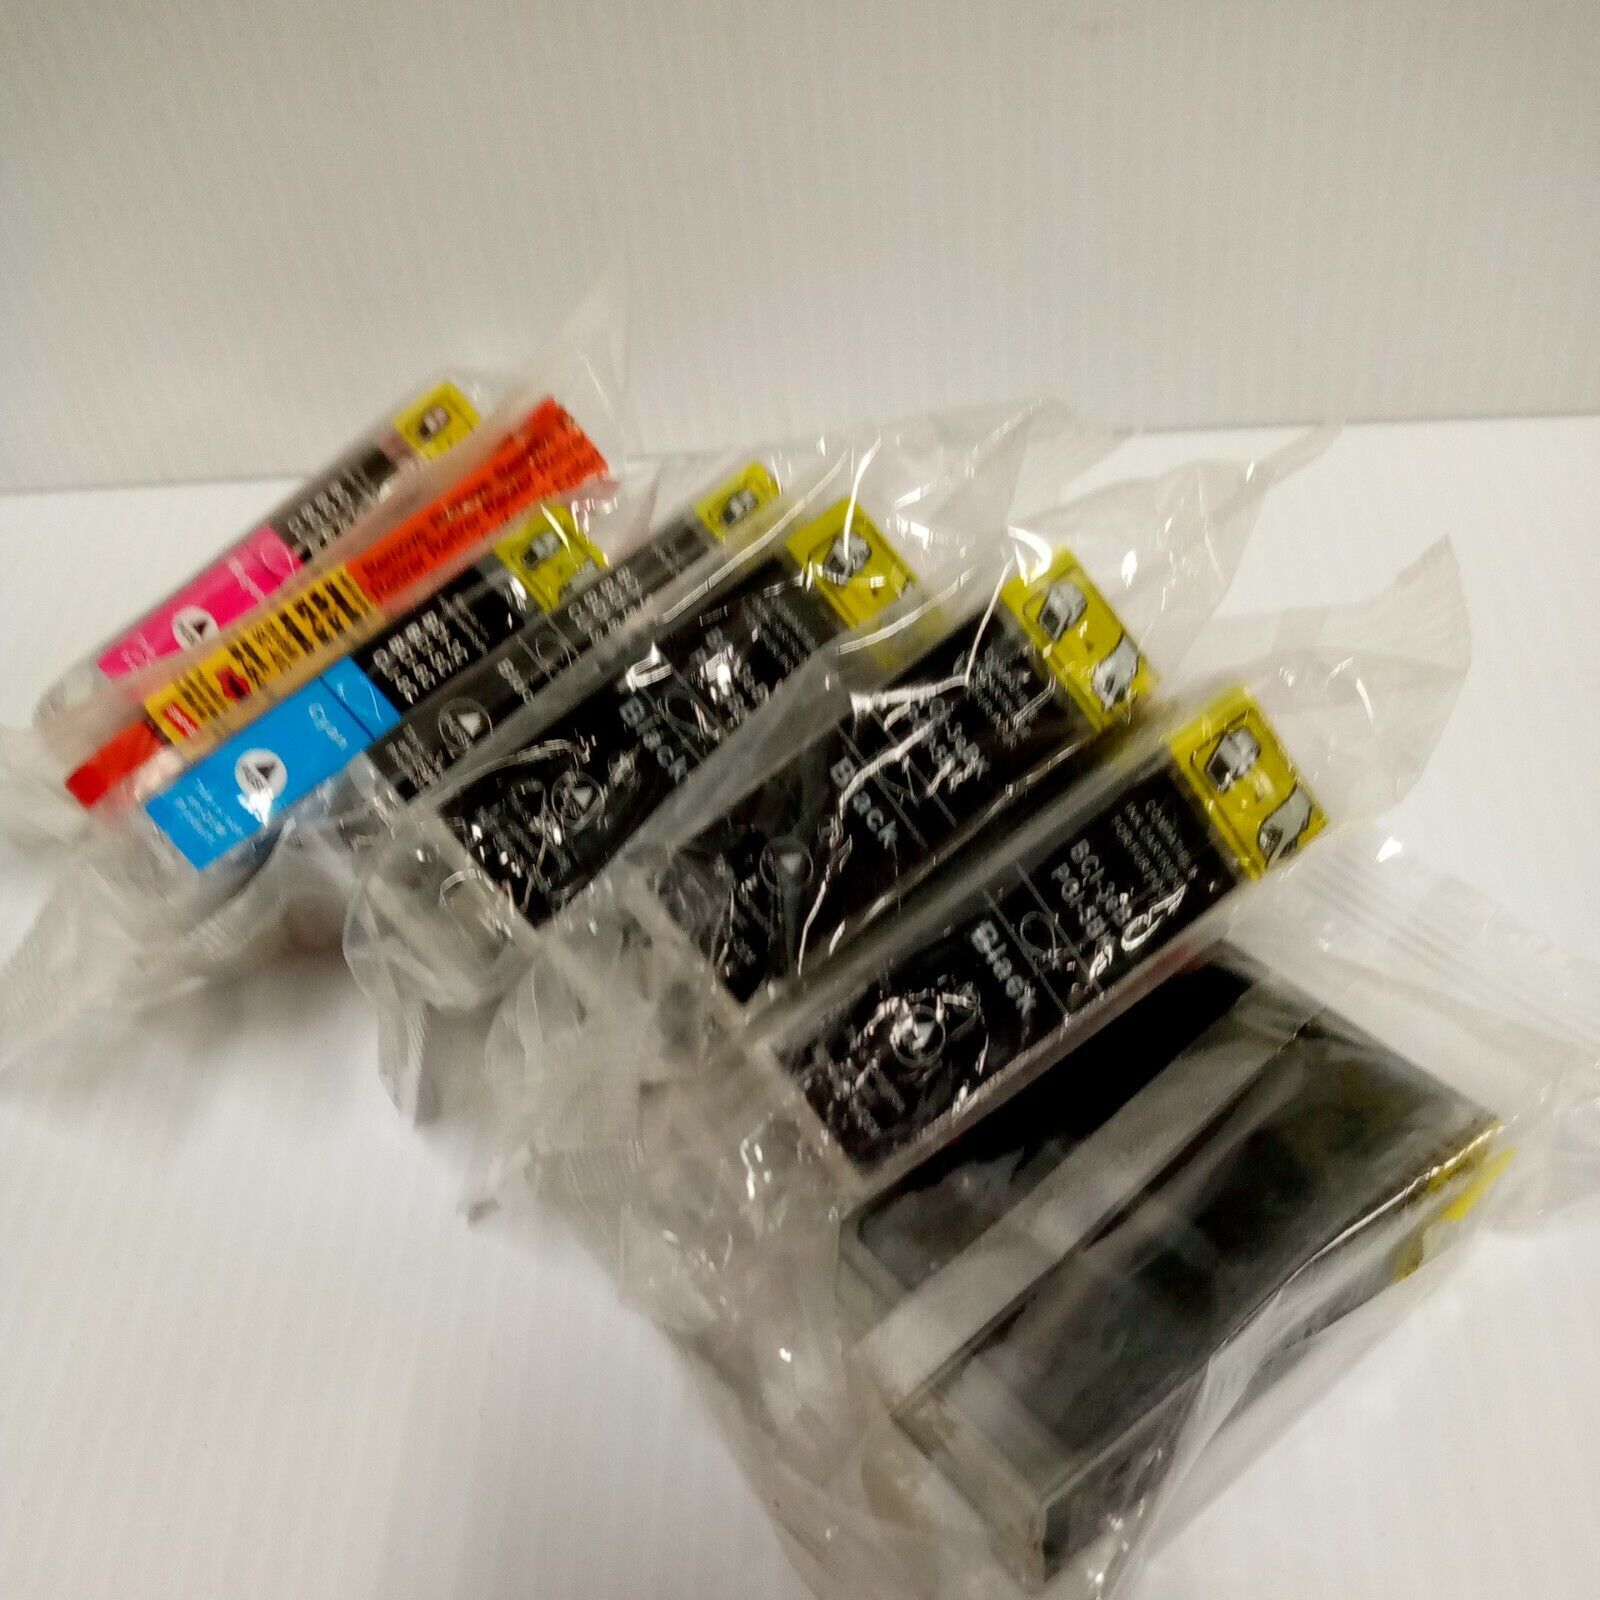 1 Lot of 8 Ink Cartridges, 1 Sm Blk, 4 Blk, 2 Magenta & 1 Cyan (FC 47/2 D212)